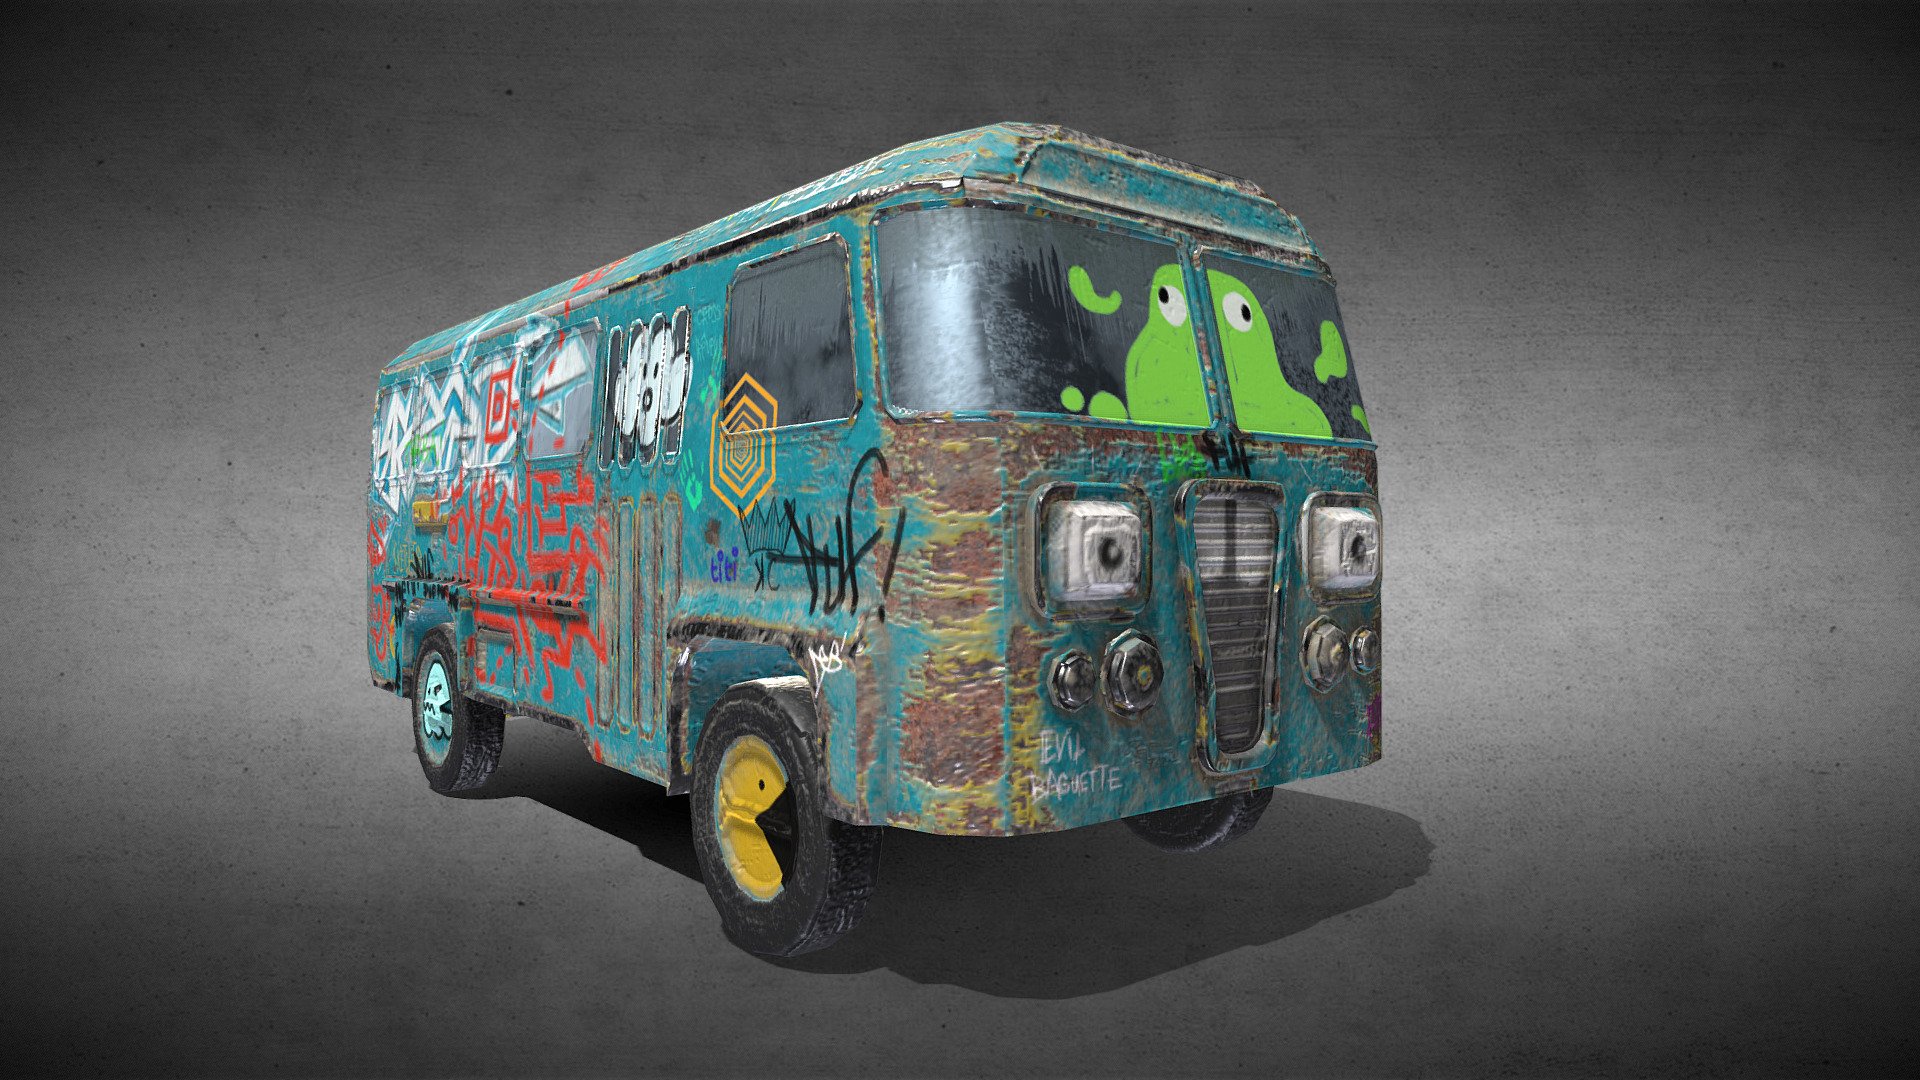 Bus covered in graffiti